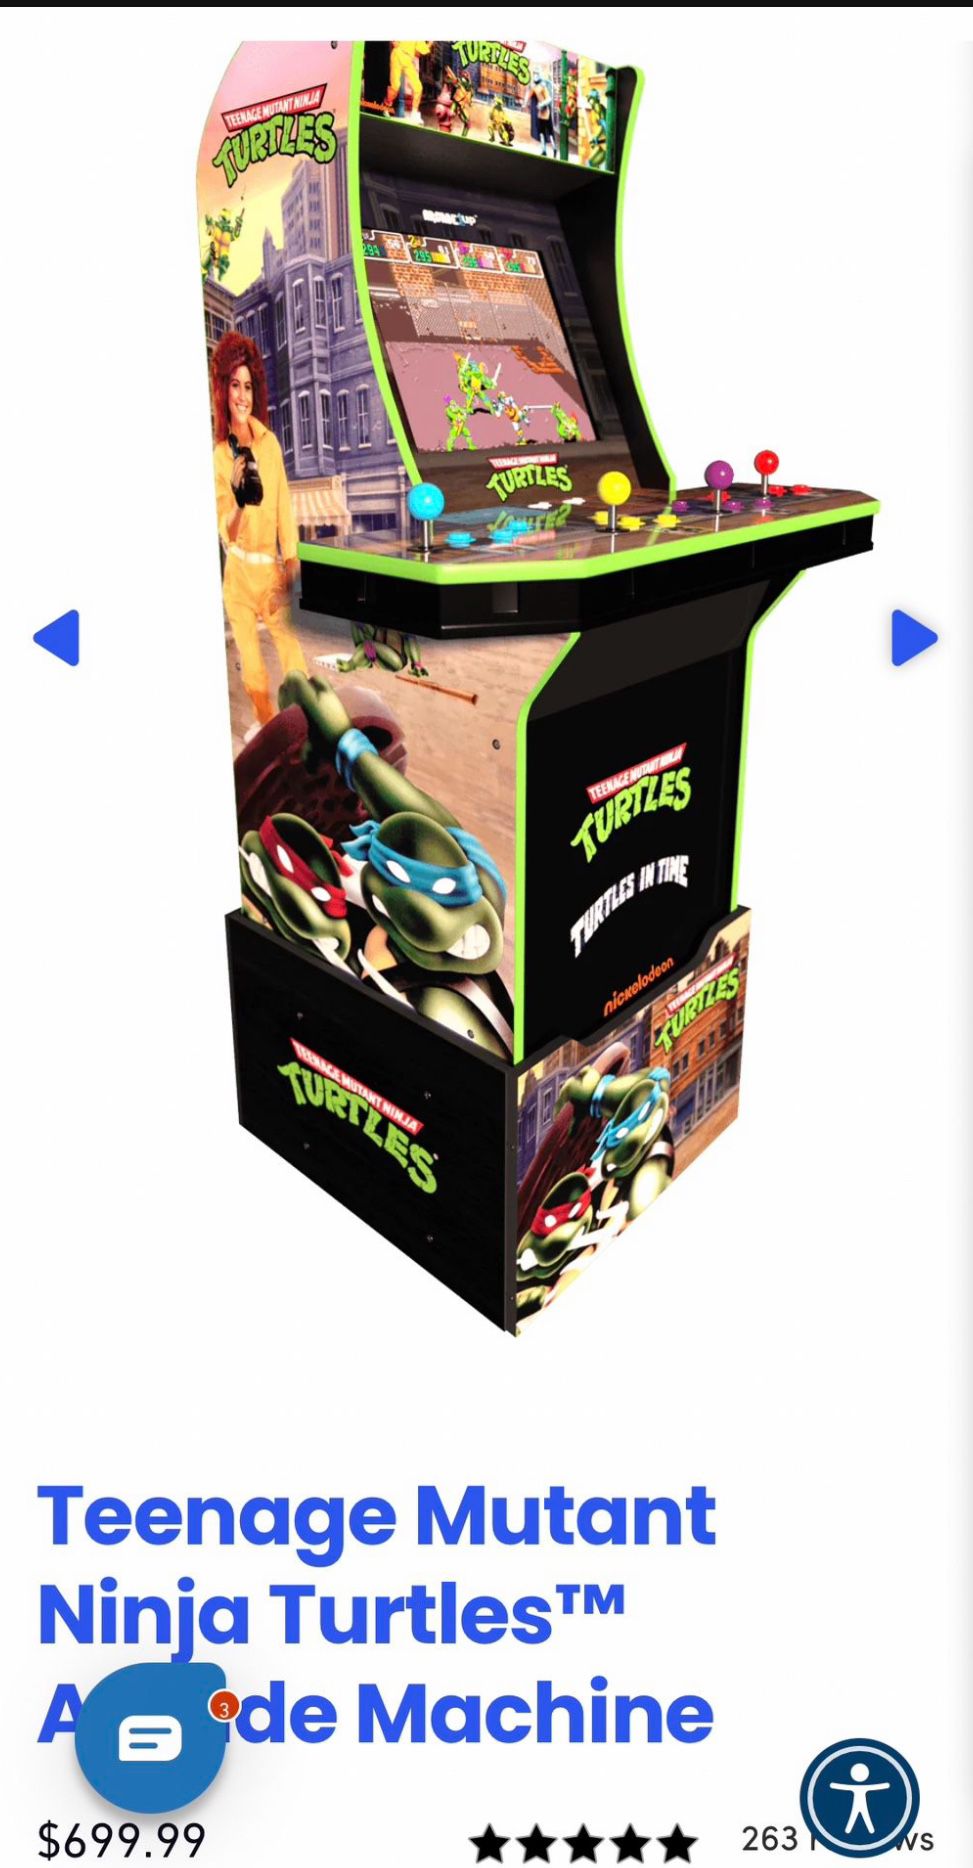 1up Arcade Teenage Mutant Ninja Turtles $300 (BRAND NEW IN BOX)